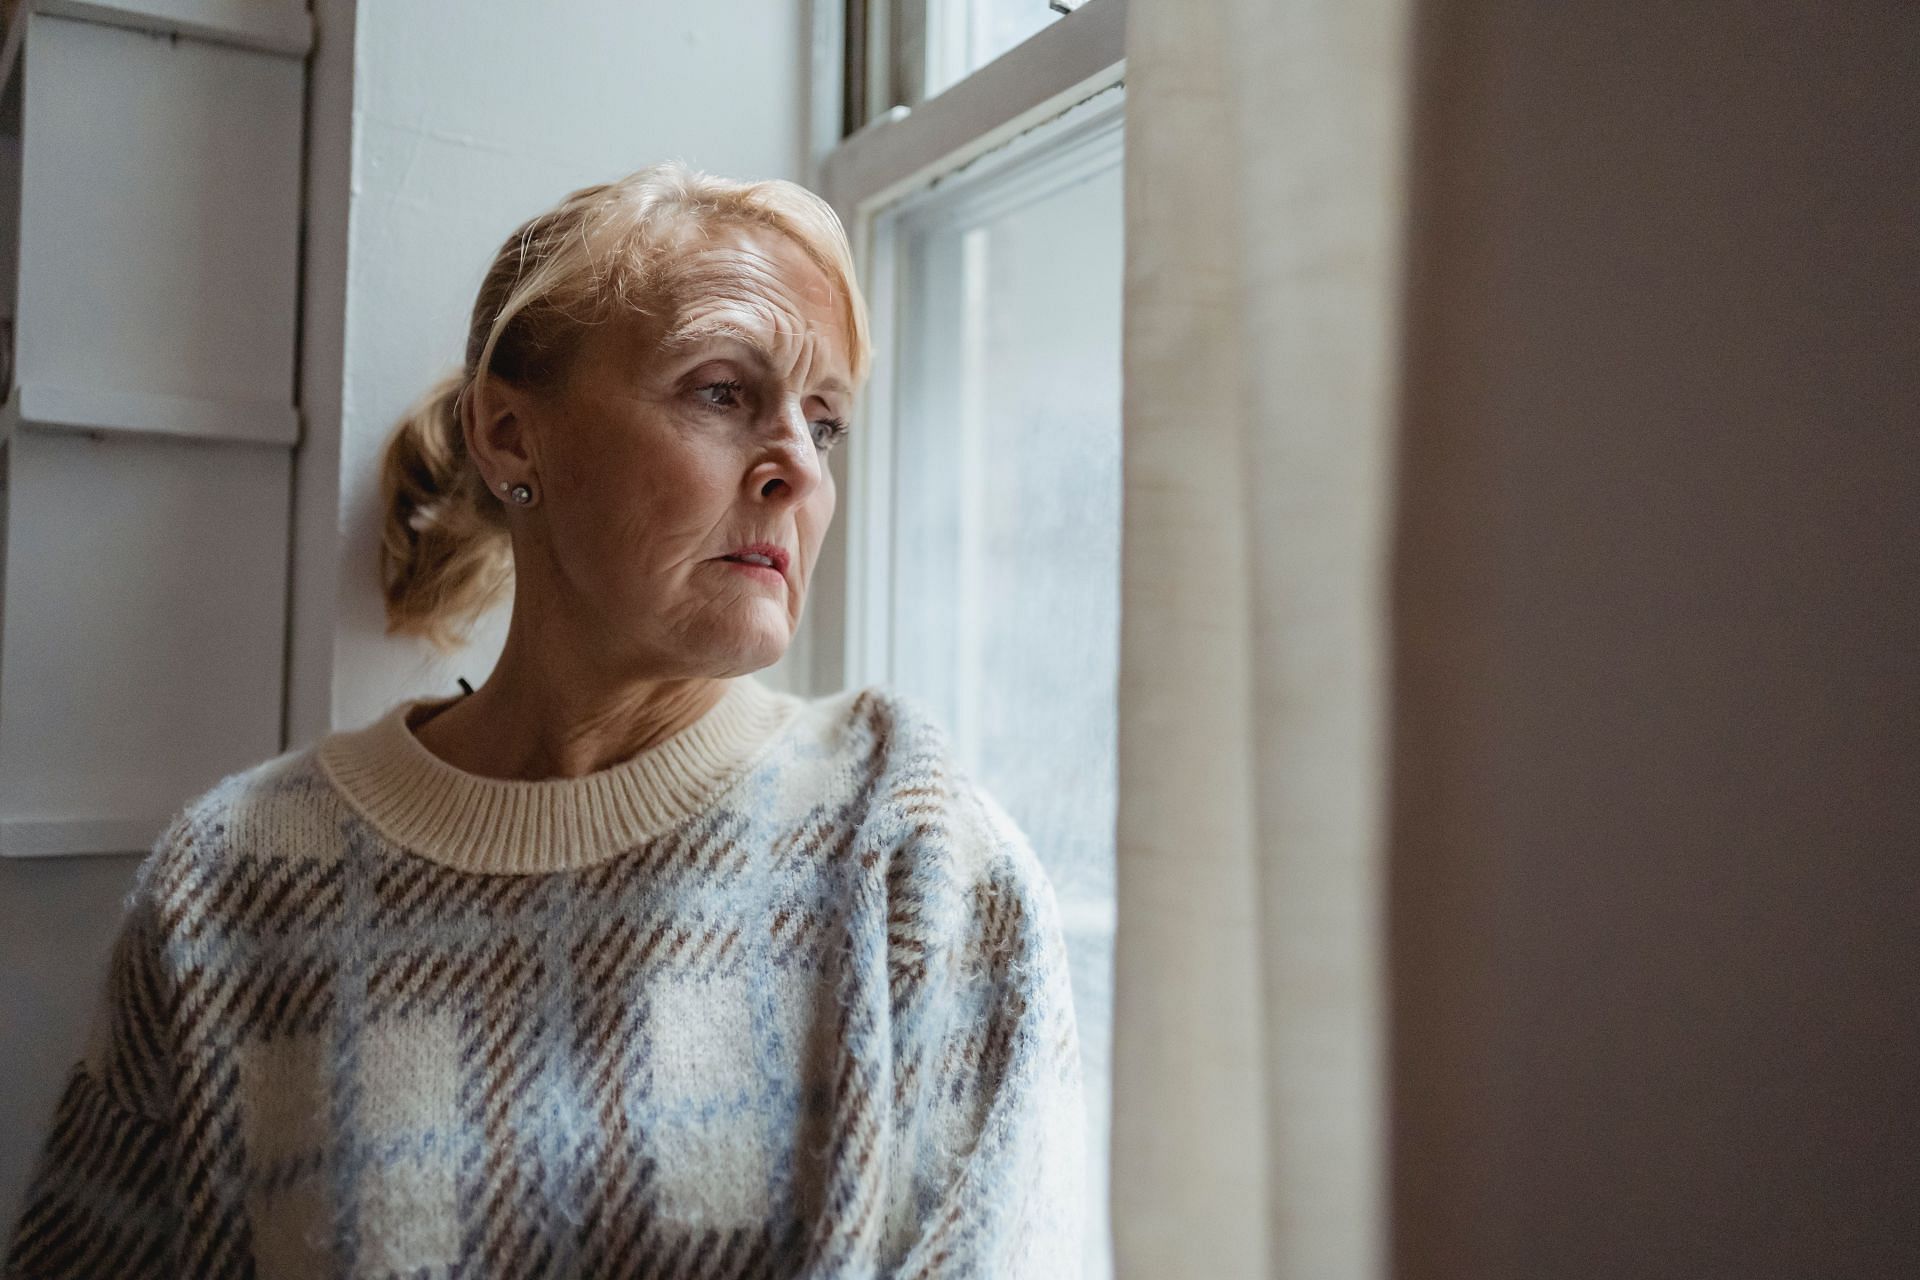 Stress in seniors often gets unnoticed. (Image via Pexels/ Teona Swift)